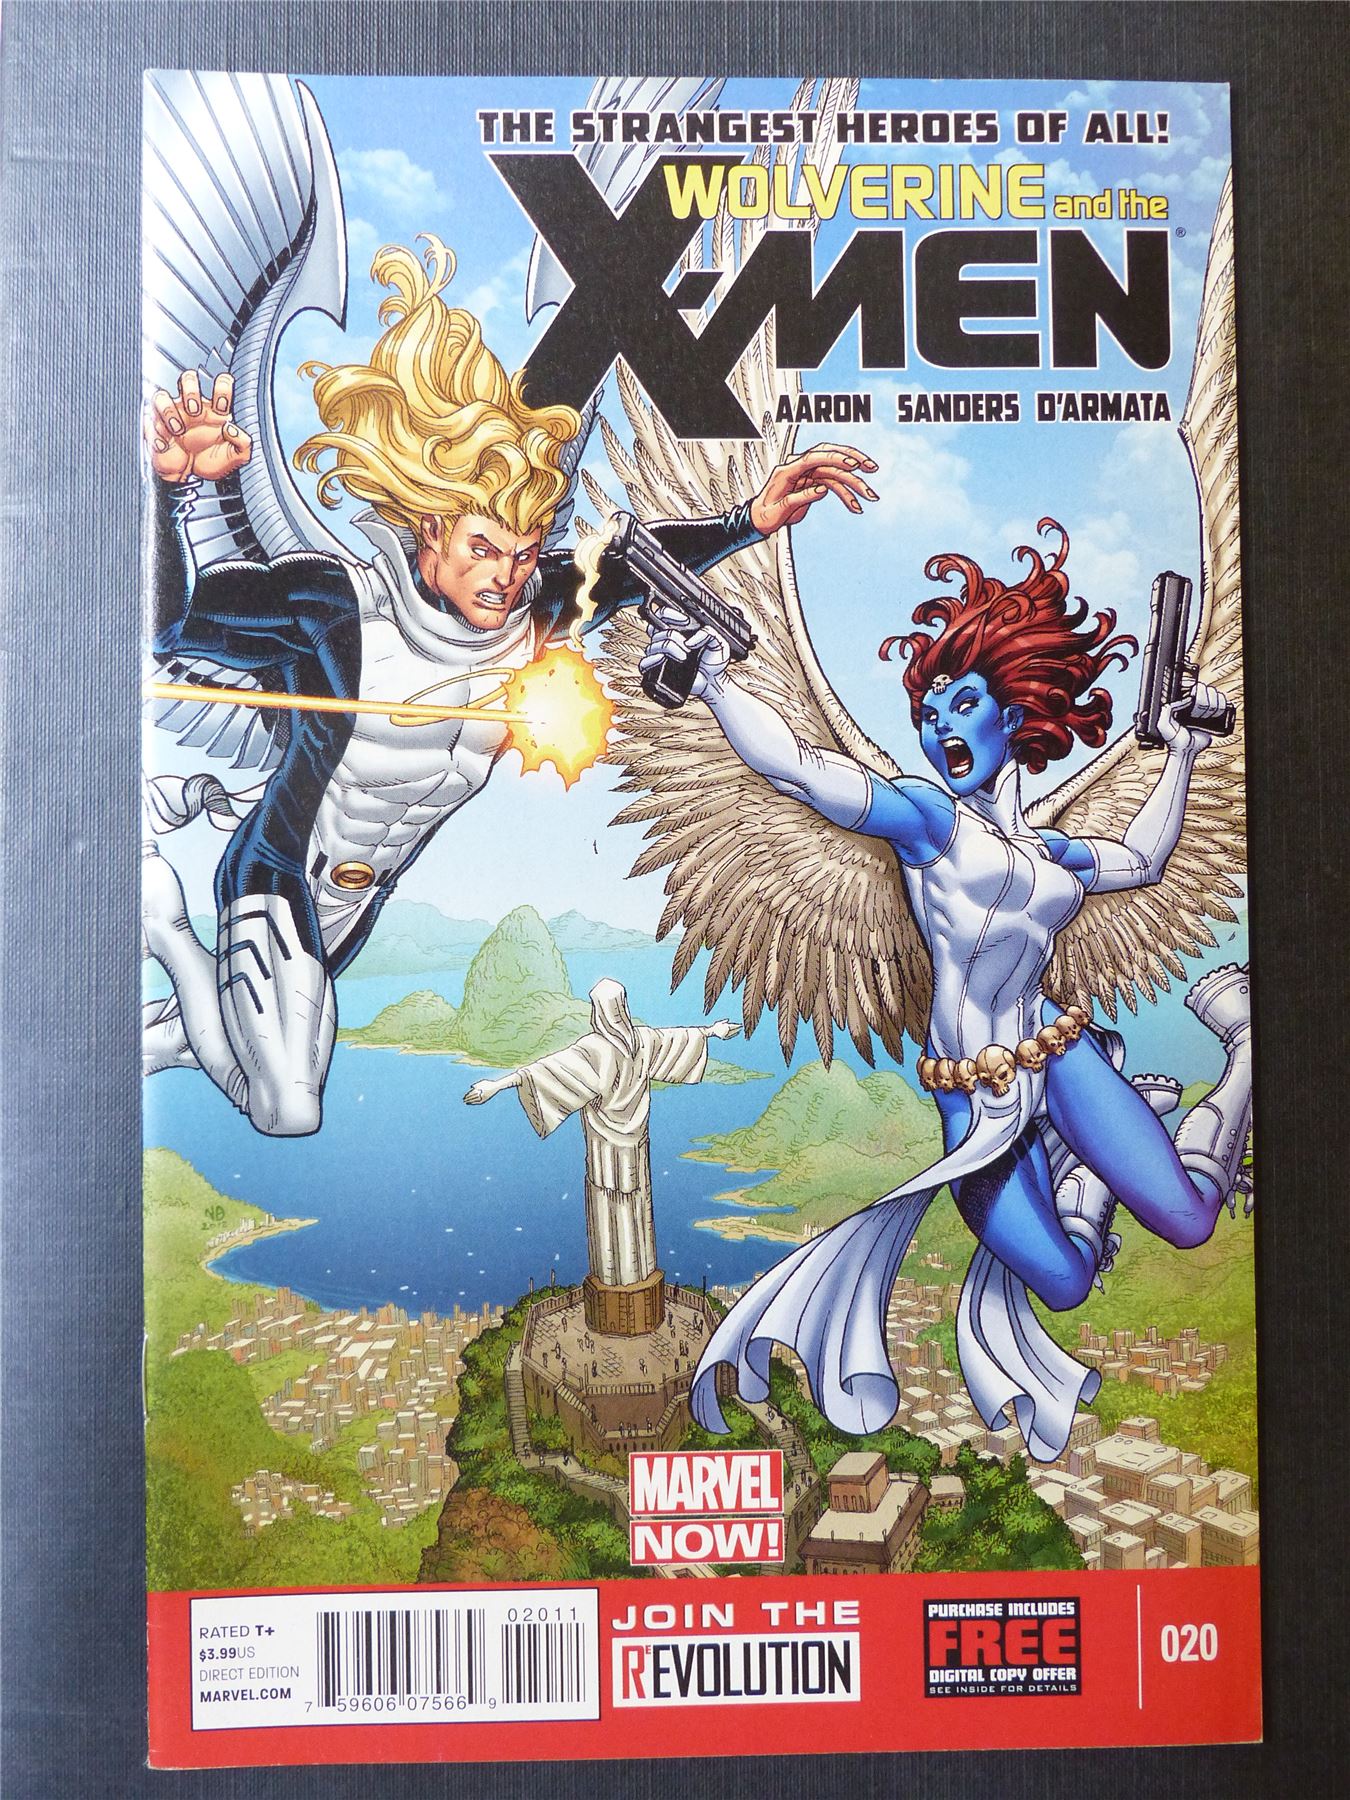 WOLVERINE and the X-Men #20 - Marvel Comics #1DZ